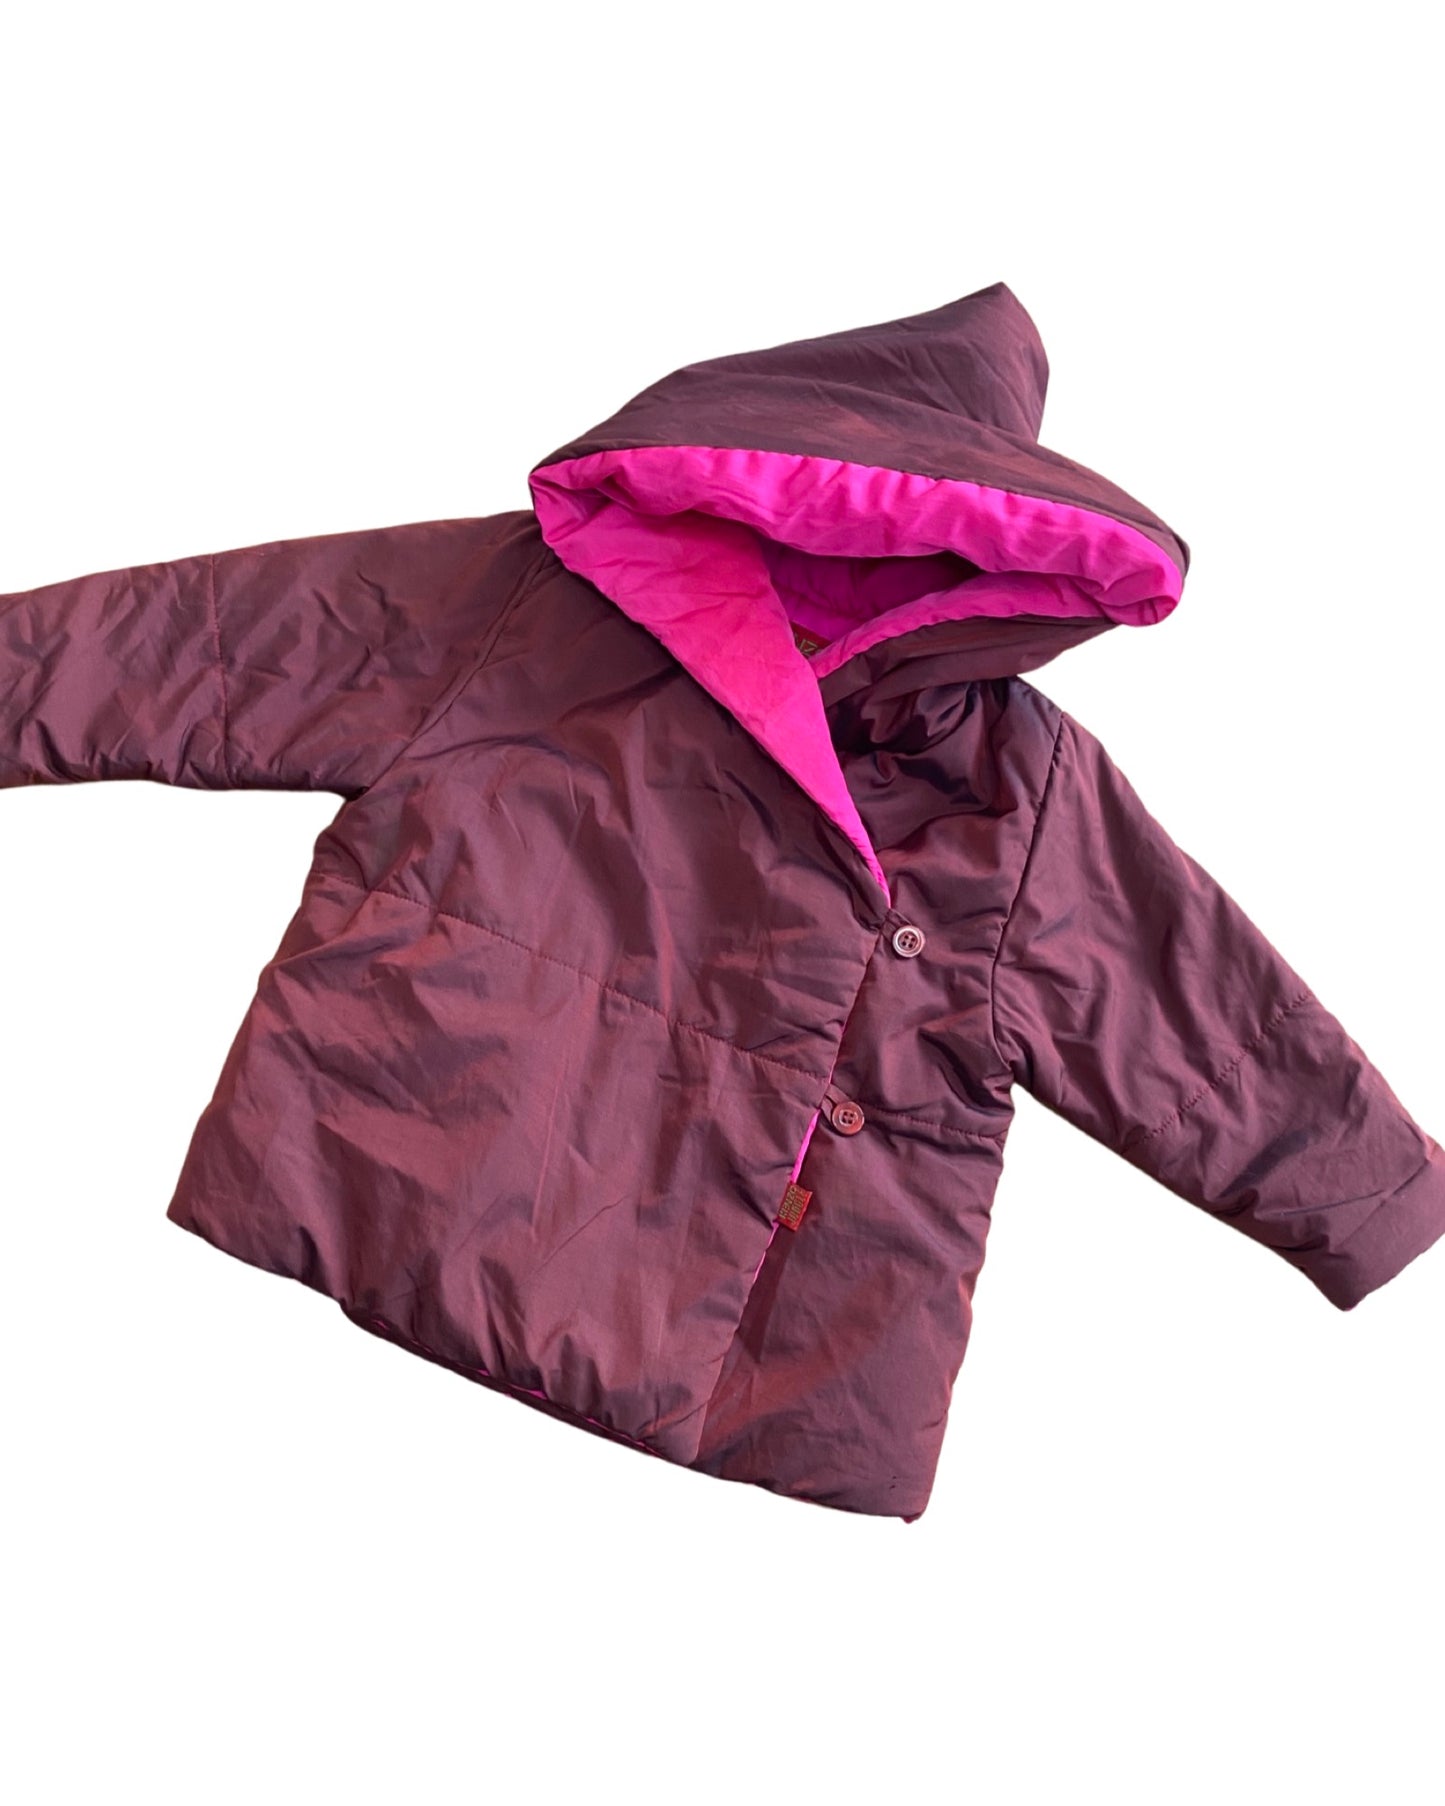 Vintage Kenzo Jungle Padded Jacket in pink/burgundy (12-18mths)